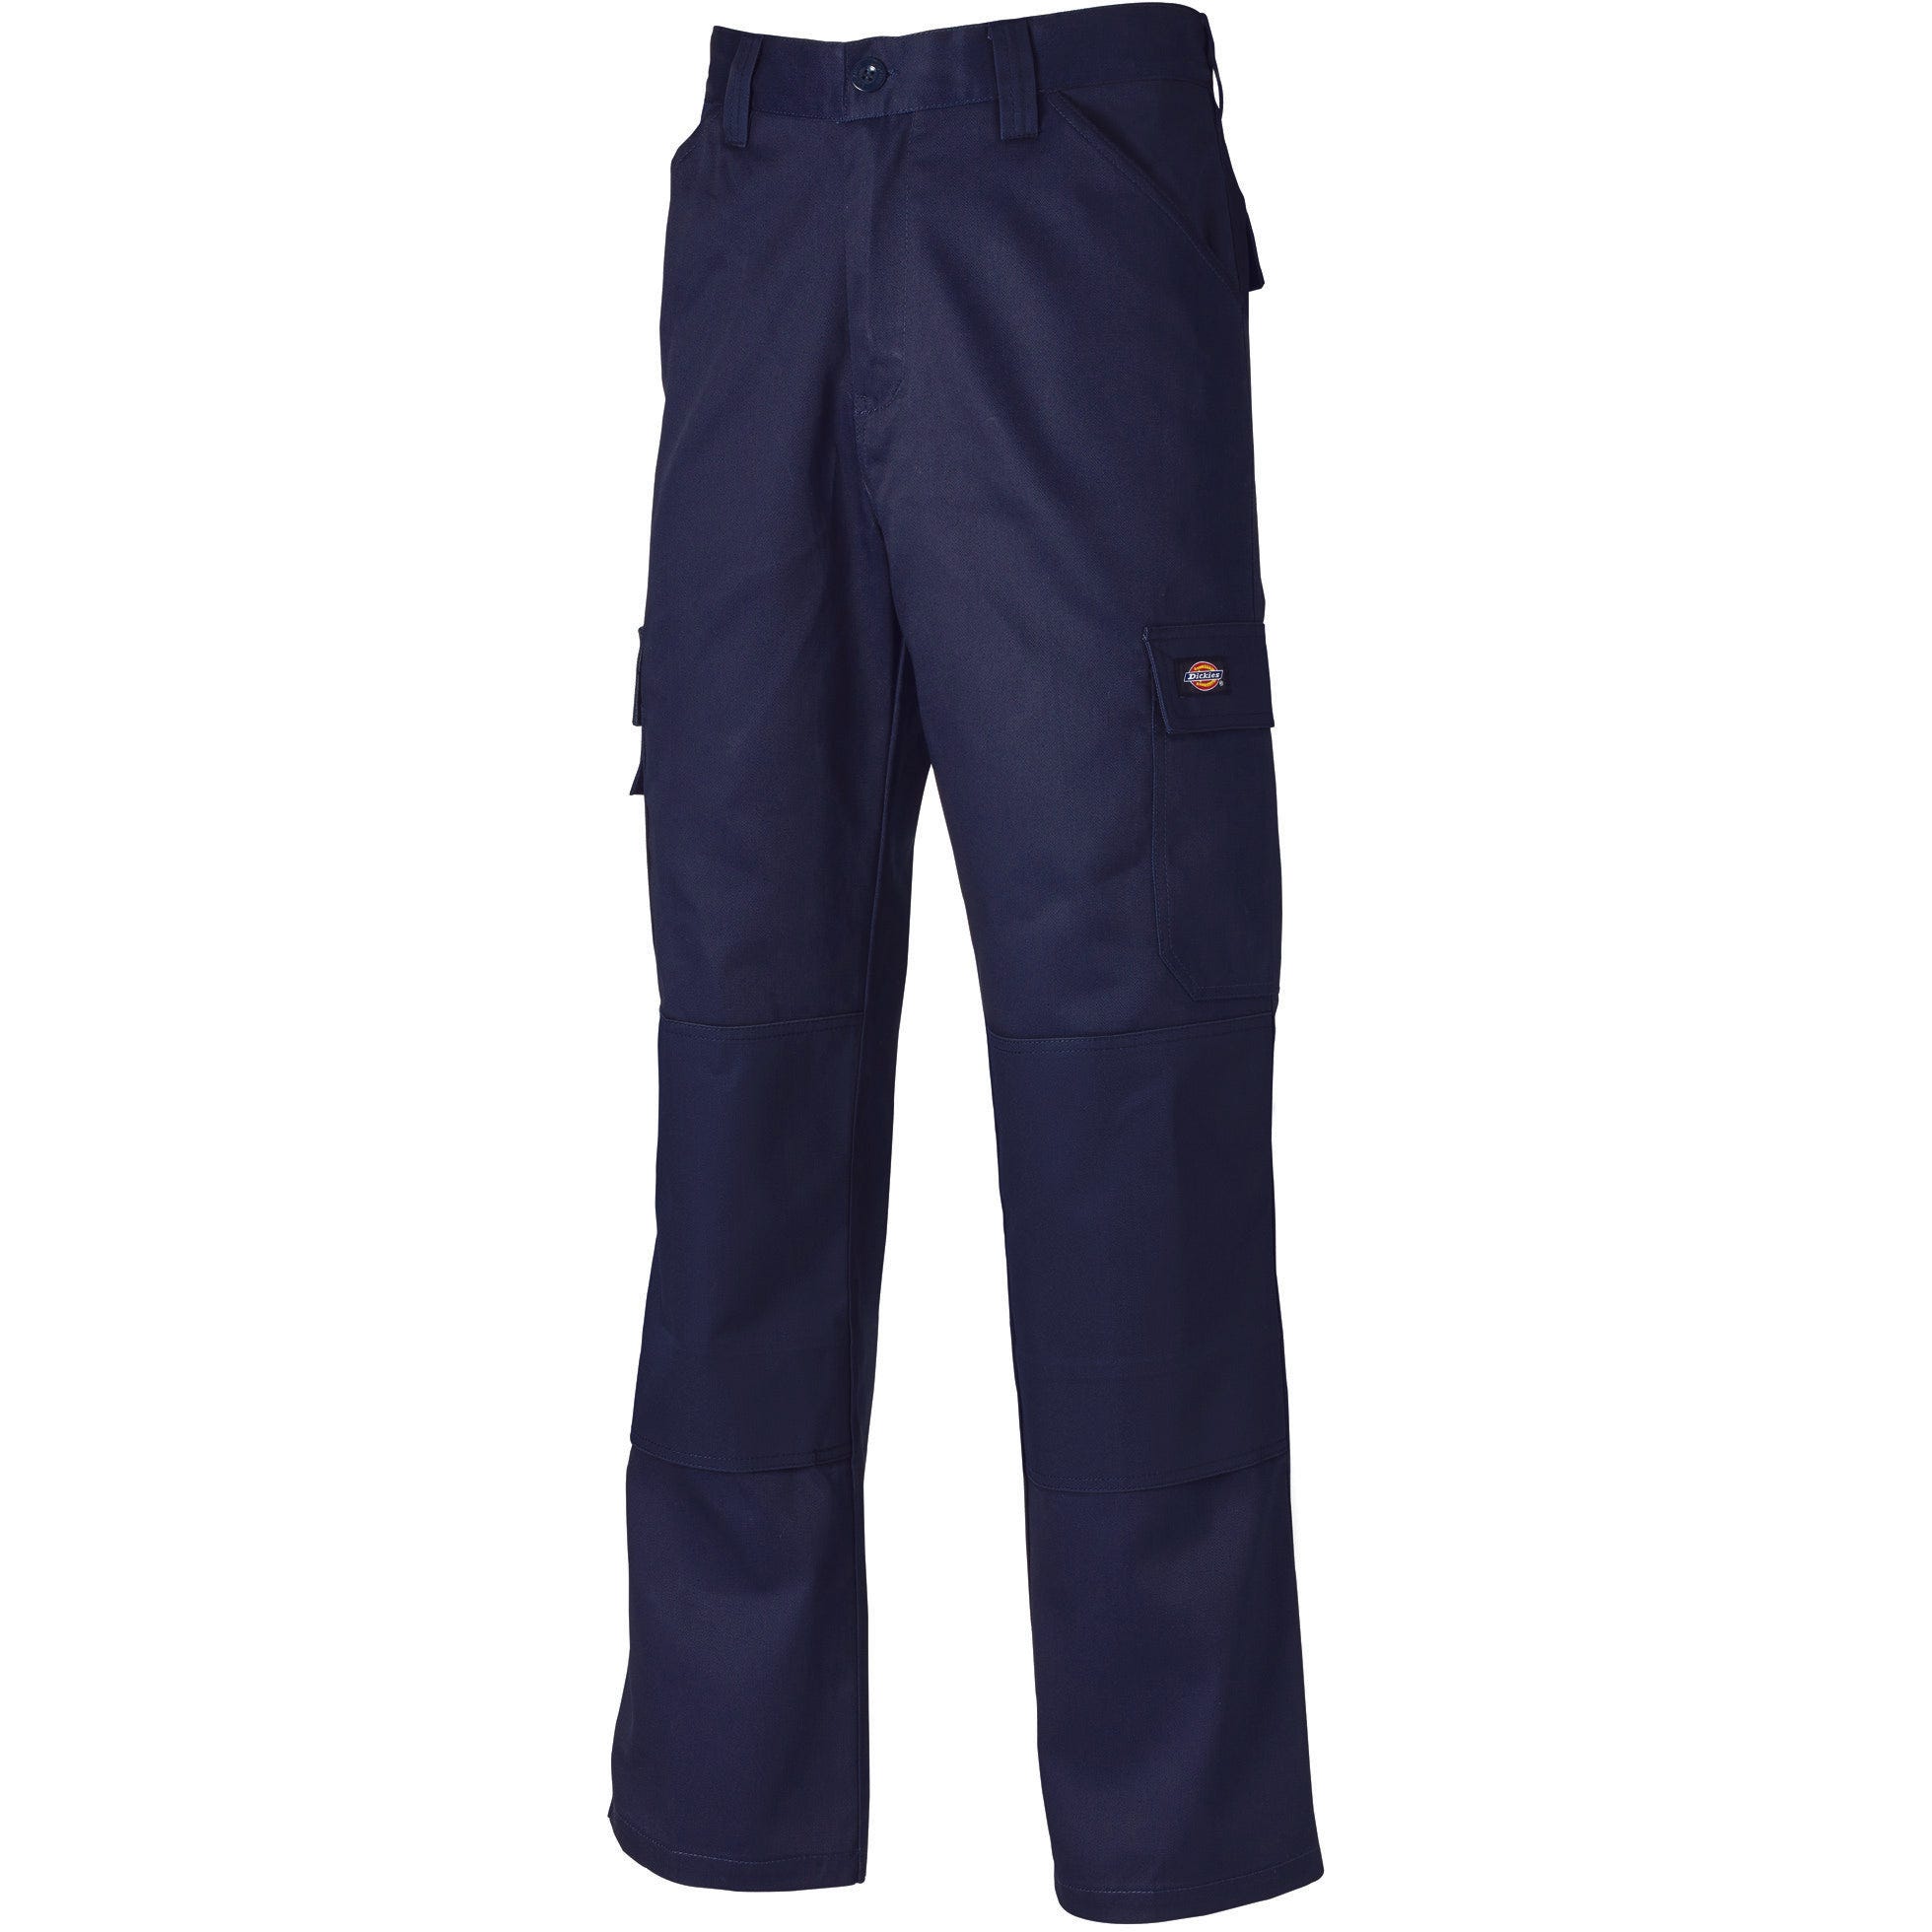 Pantalon Everyday Bleu marine - Dickies - Taille 48 5